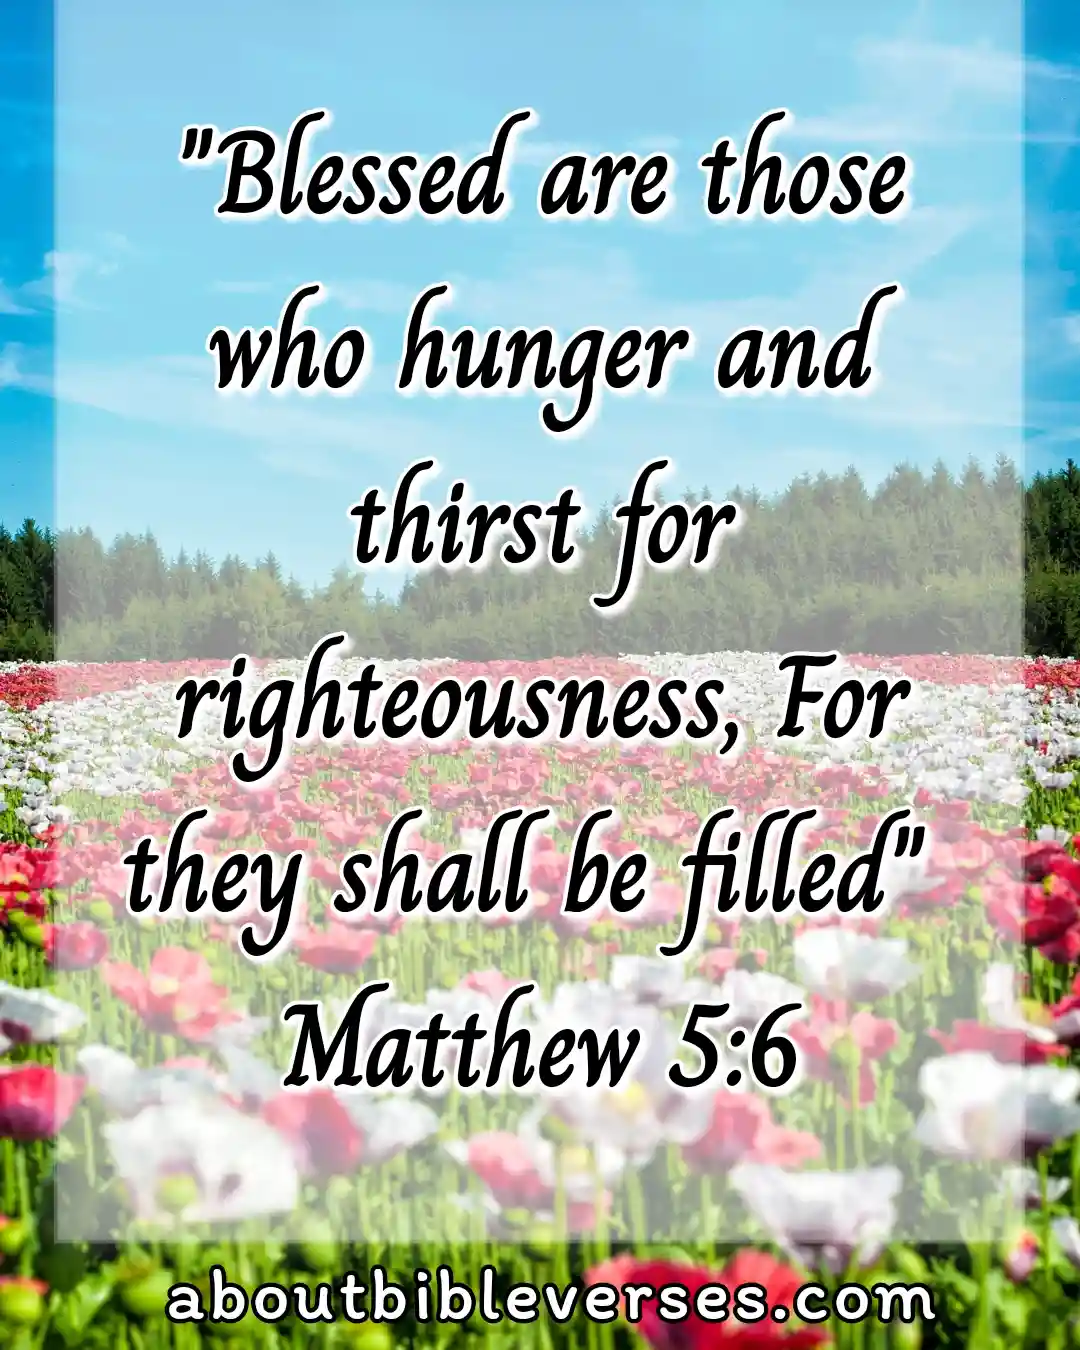 God Blessed Us (Matthew 5:6)